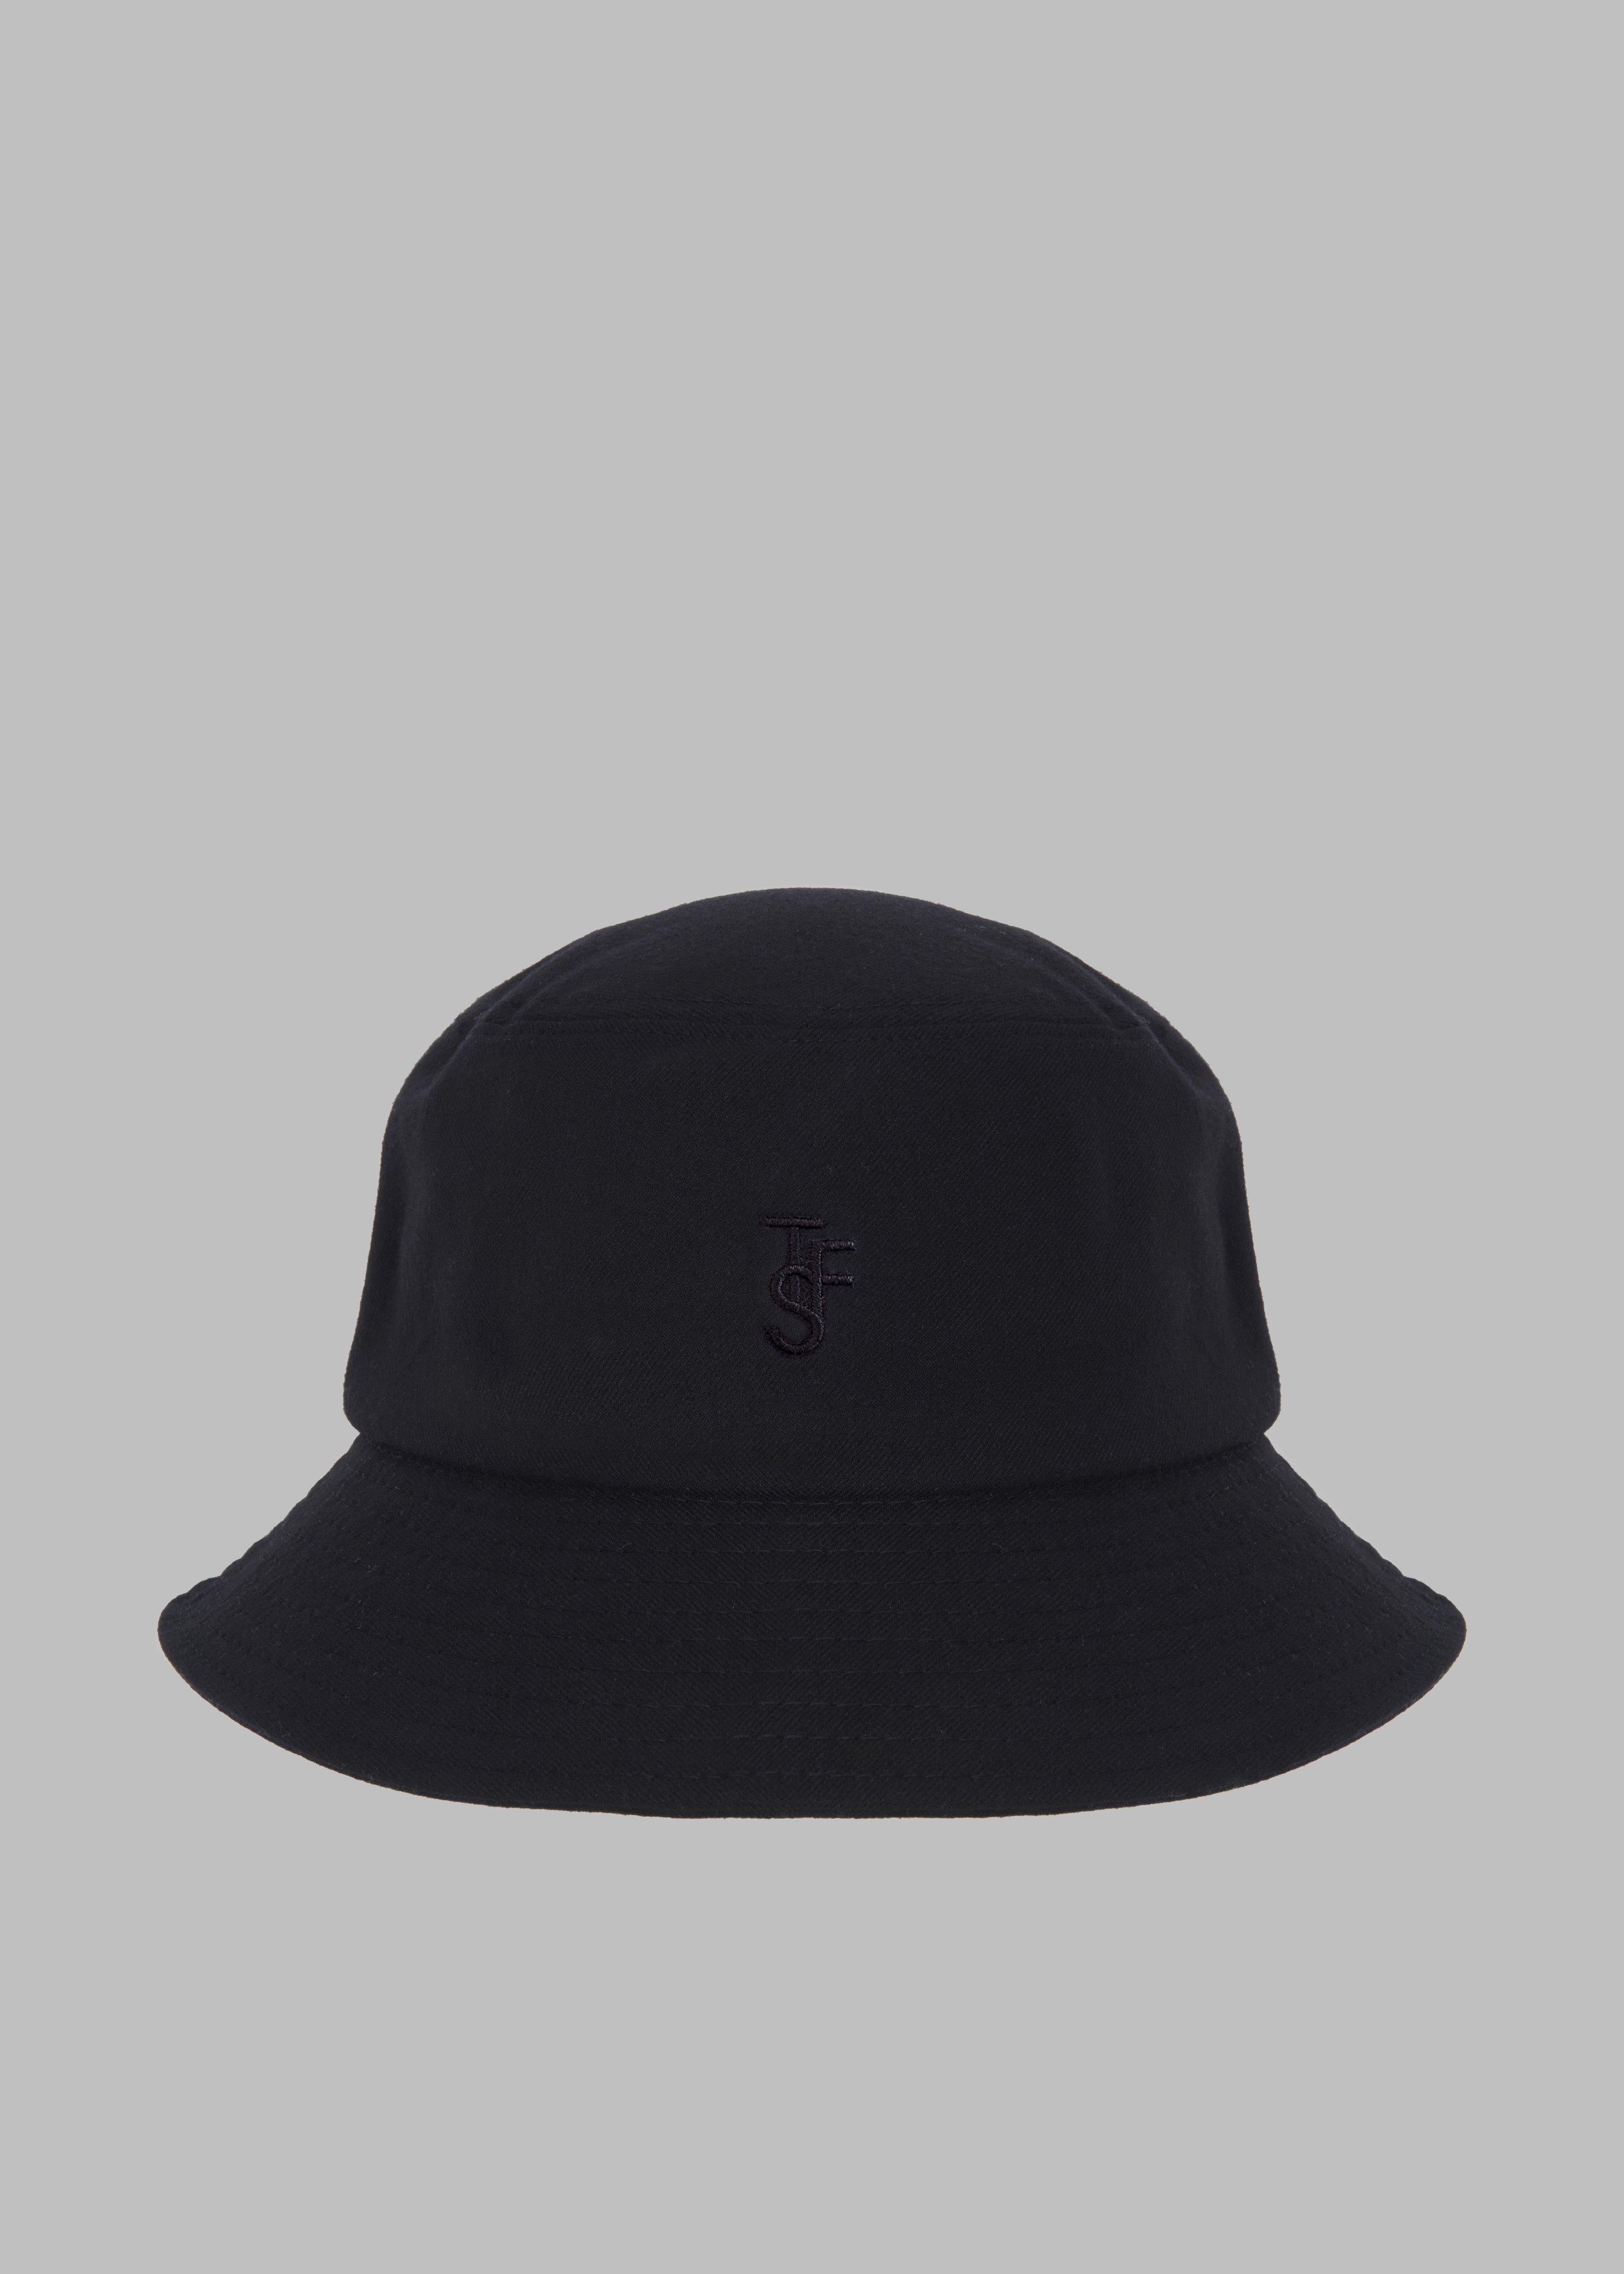 TFS Solid Flannel Bucket Hat - Black - 1